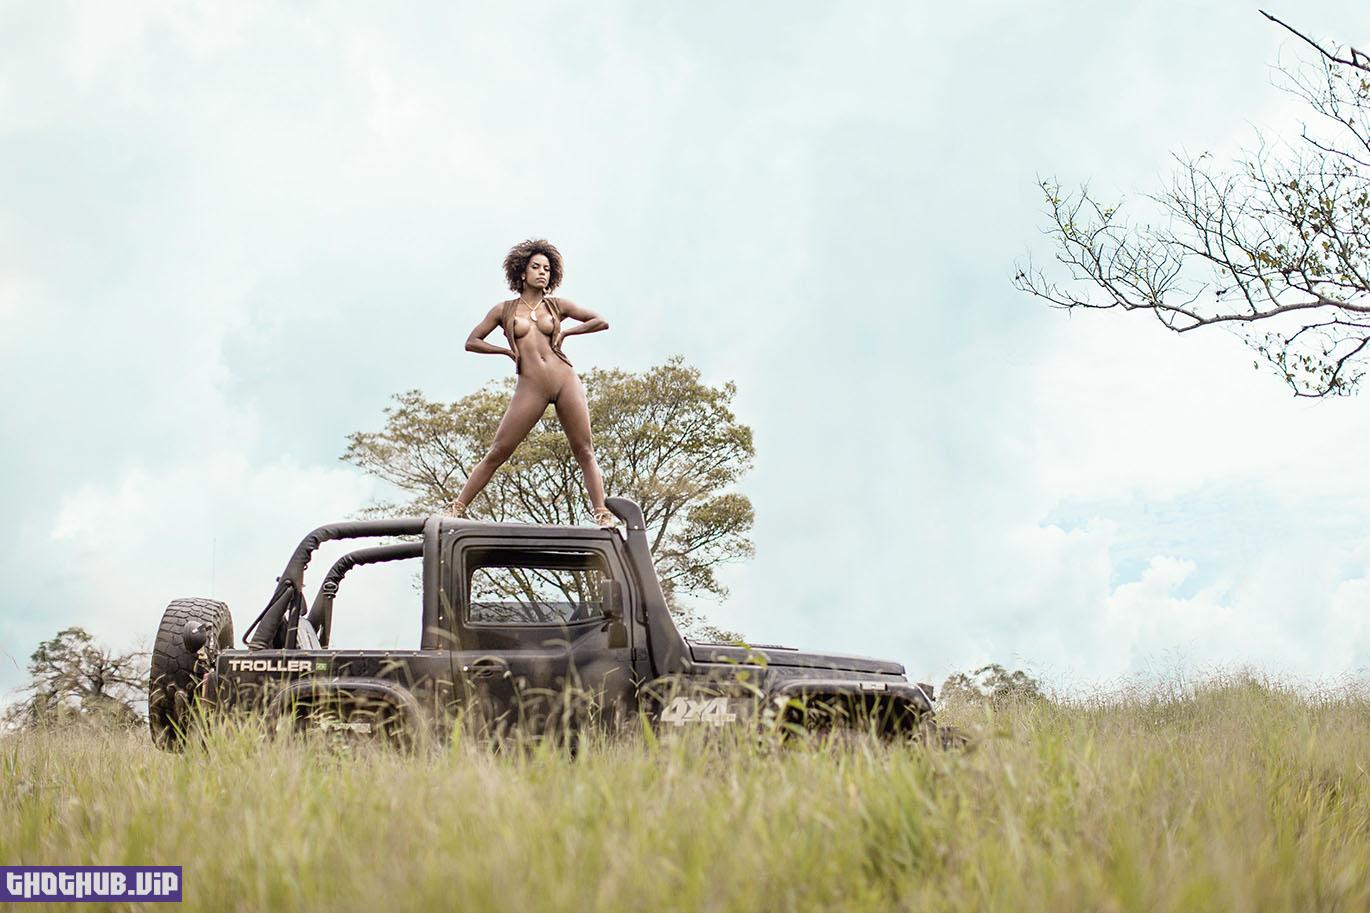 Domingão do Faustão Dancer Ivi Pizzott Leaked Nude Playboy Photo Shoot